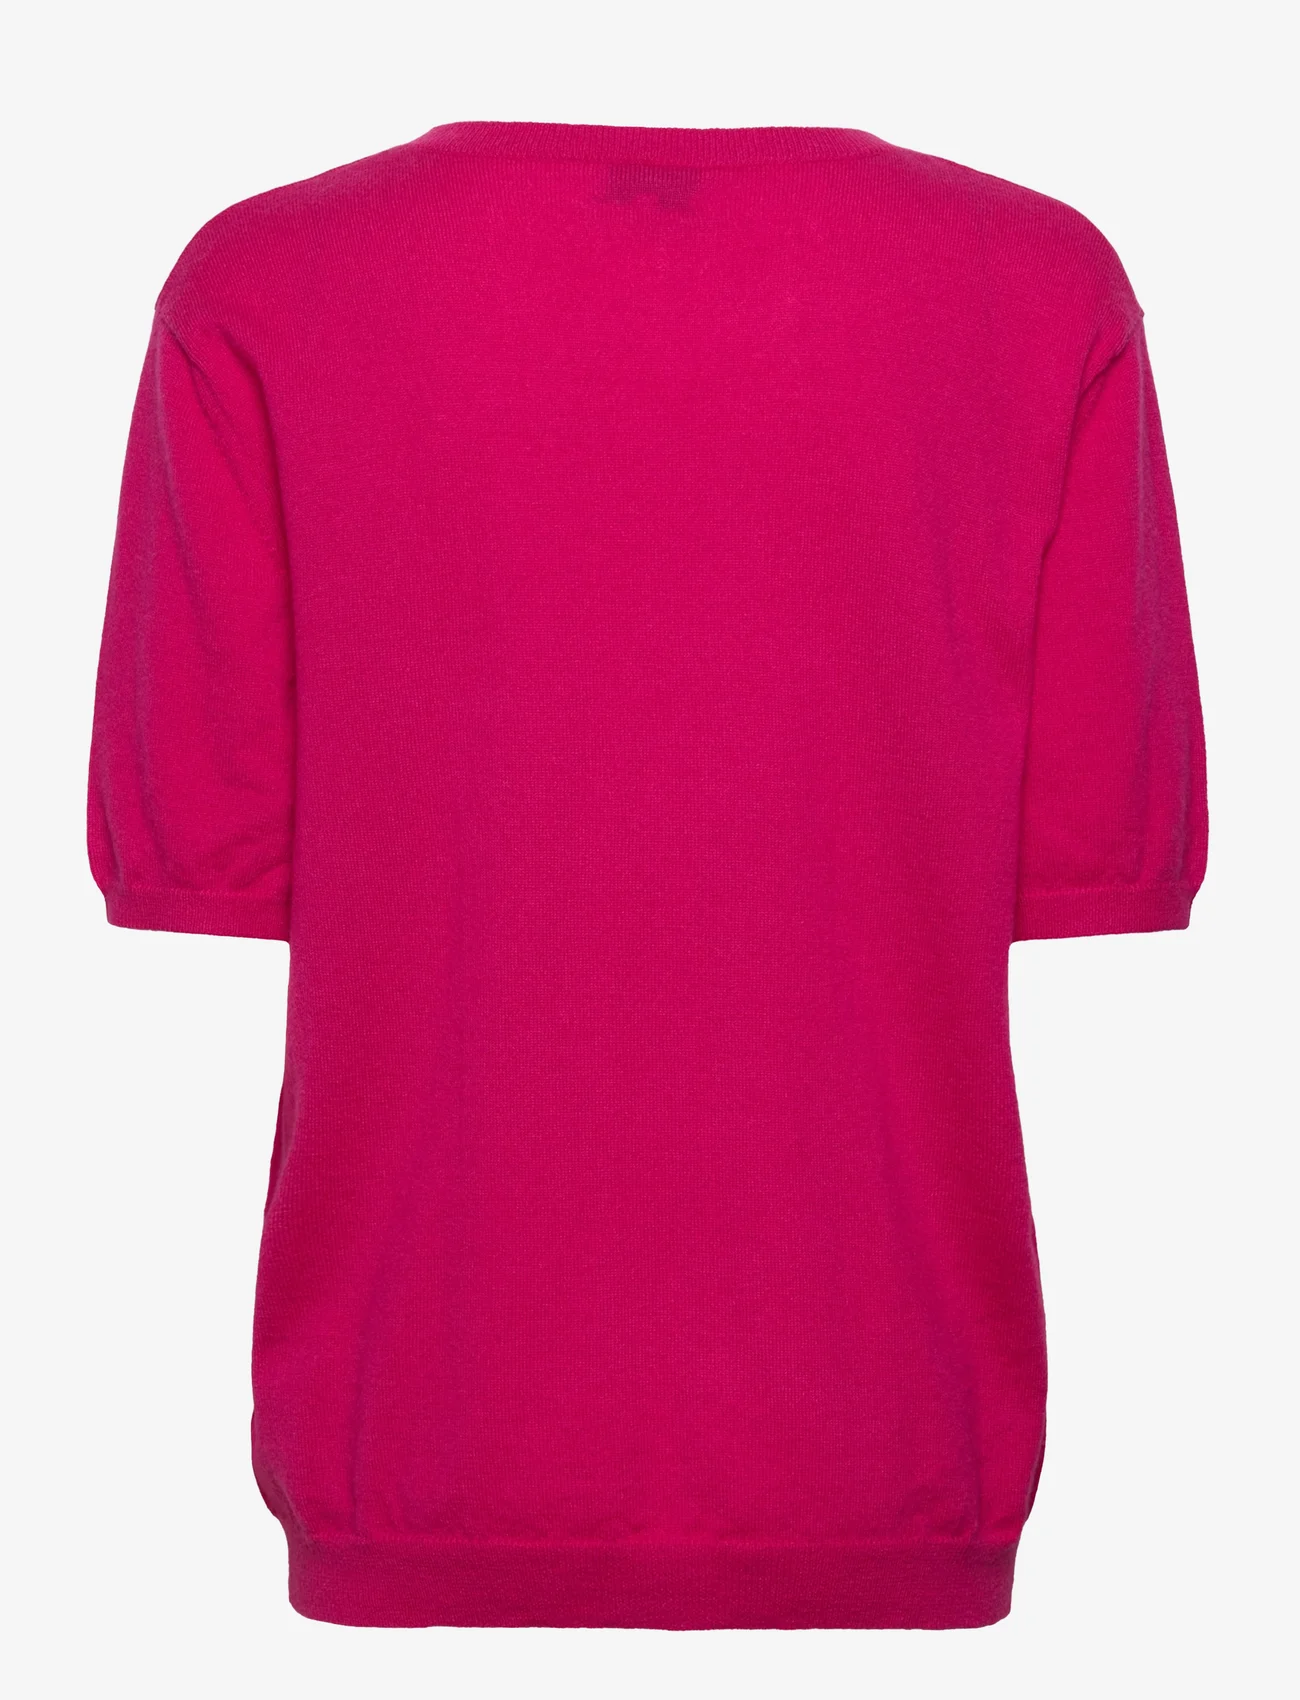 Davida Cashmere - T-shirt Oversized - trøjer - fuchsia - 1